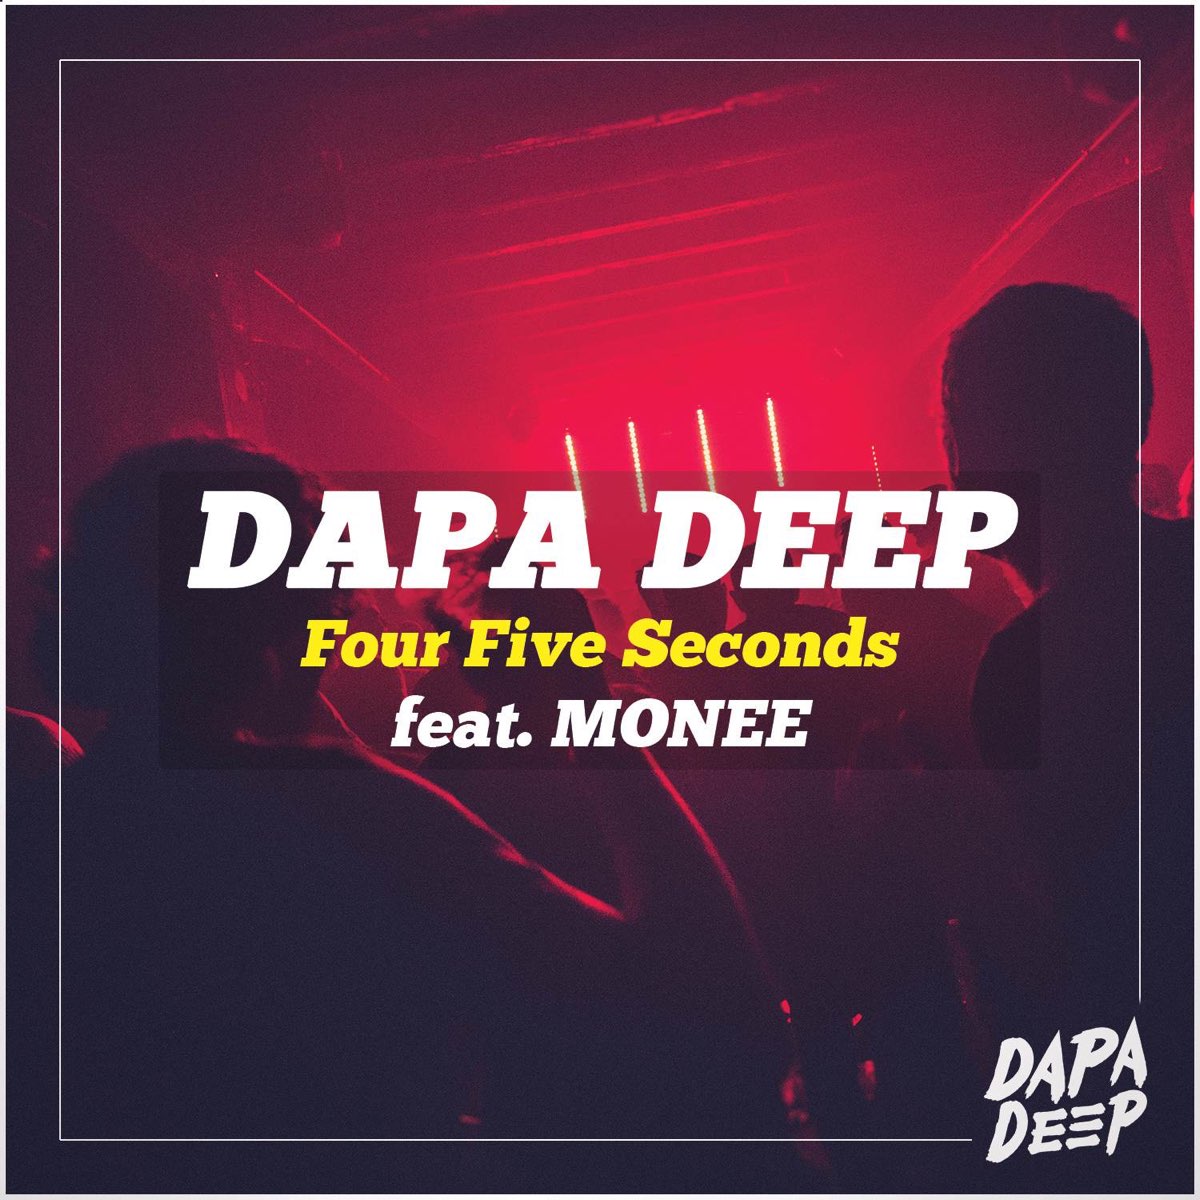 Seconds музыка. Dapa Deep four Five seconds. Dapa Deep feat. Monee - four Five seconds. Слушать Dapa Deep. Dapa Deep Control.